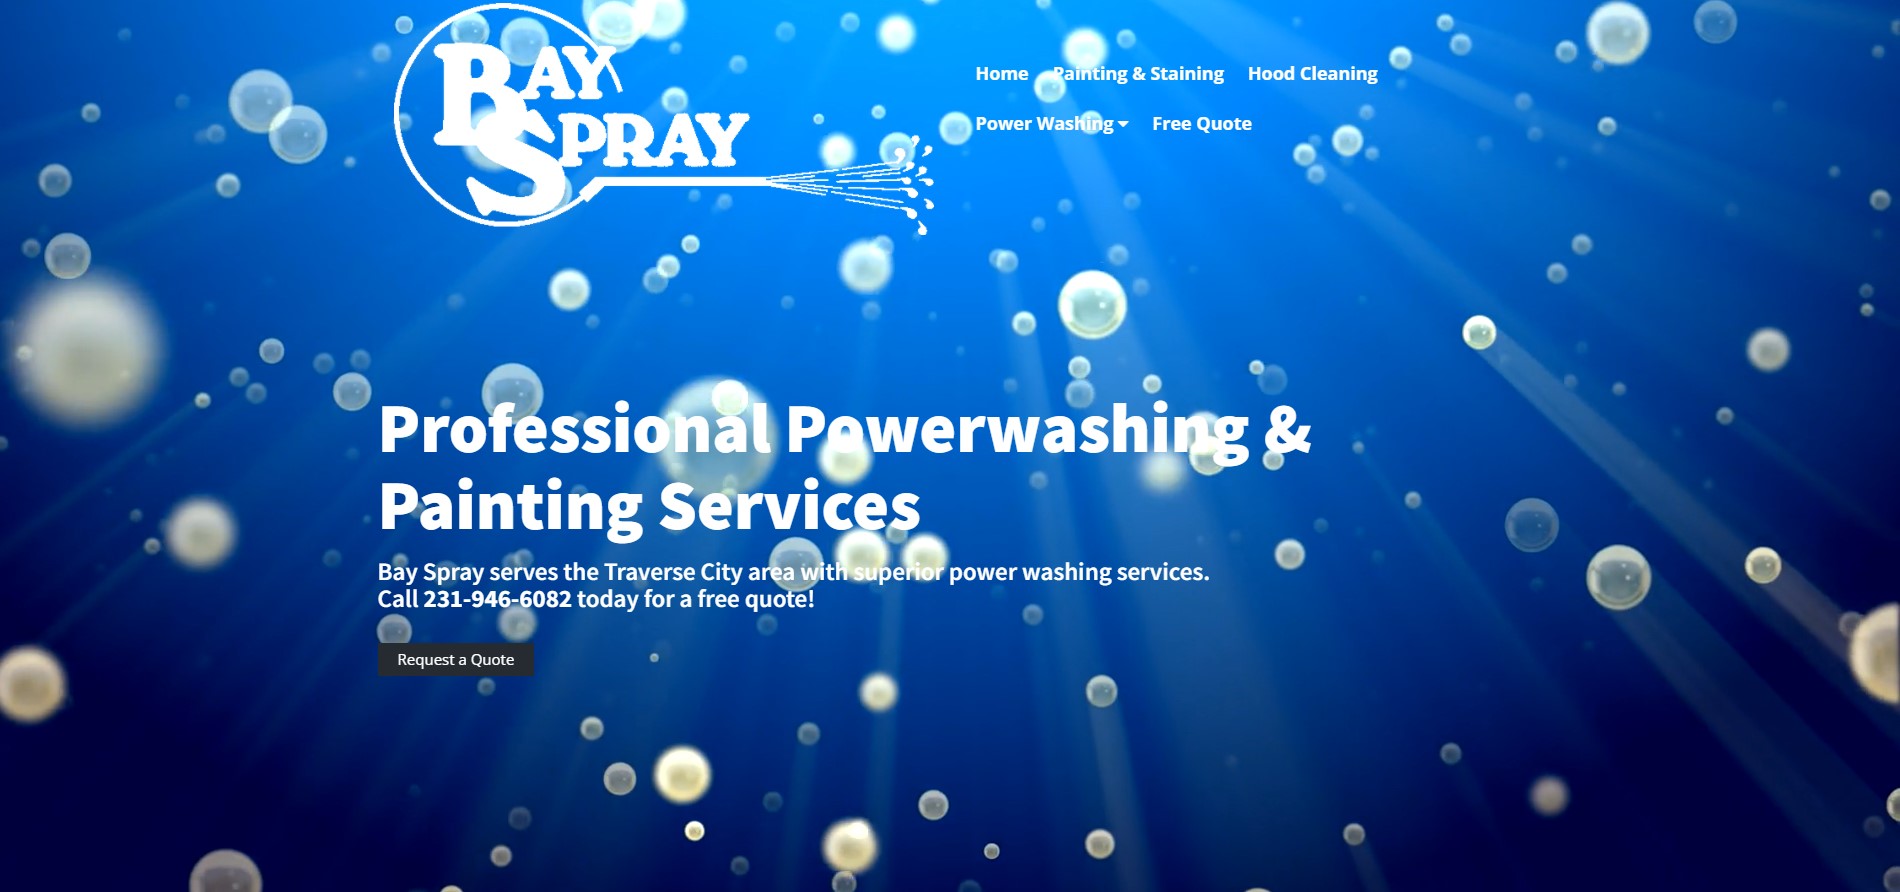 Bay Spray Power Wash website designed by Pro Web Marketing